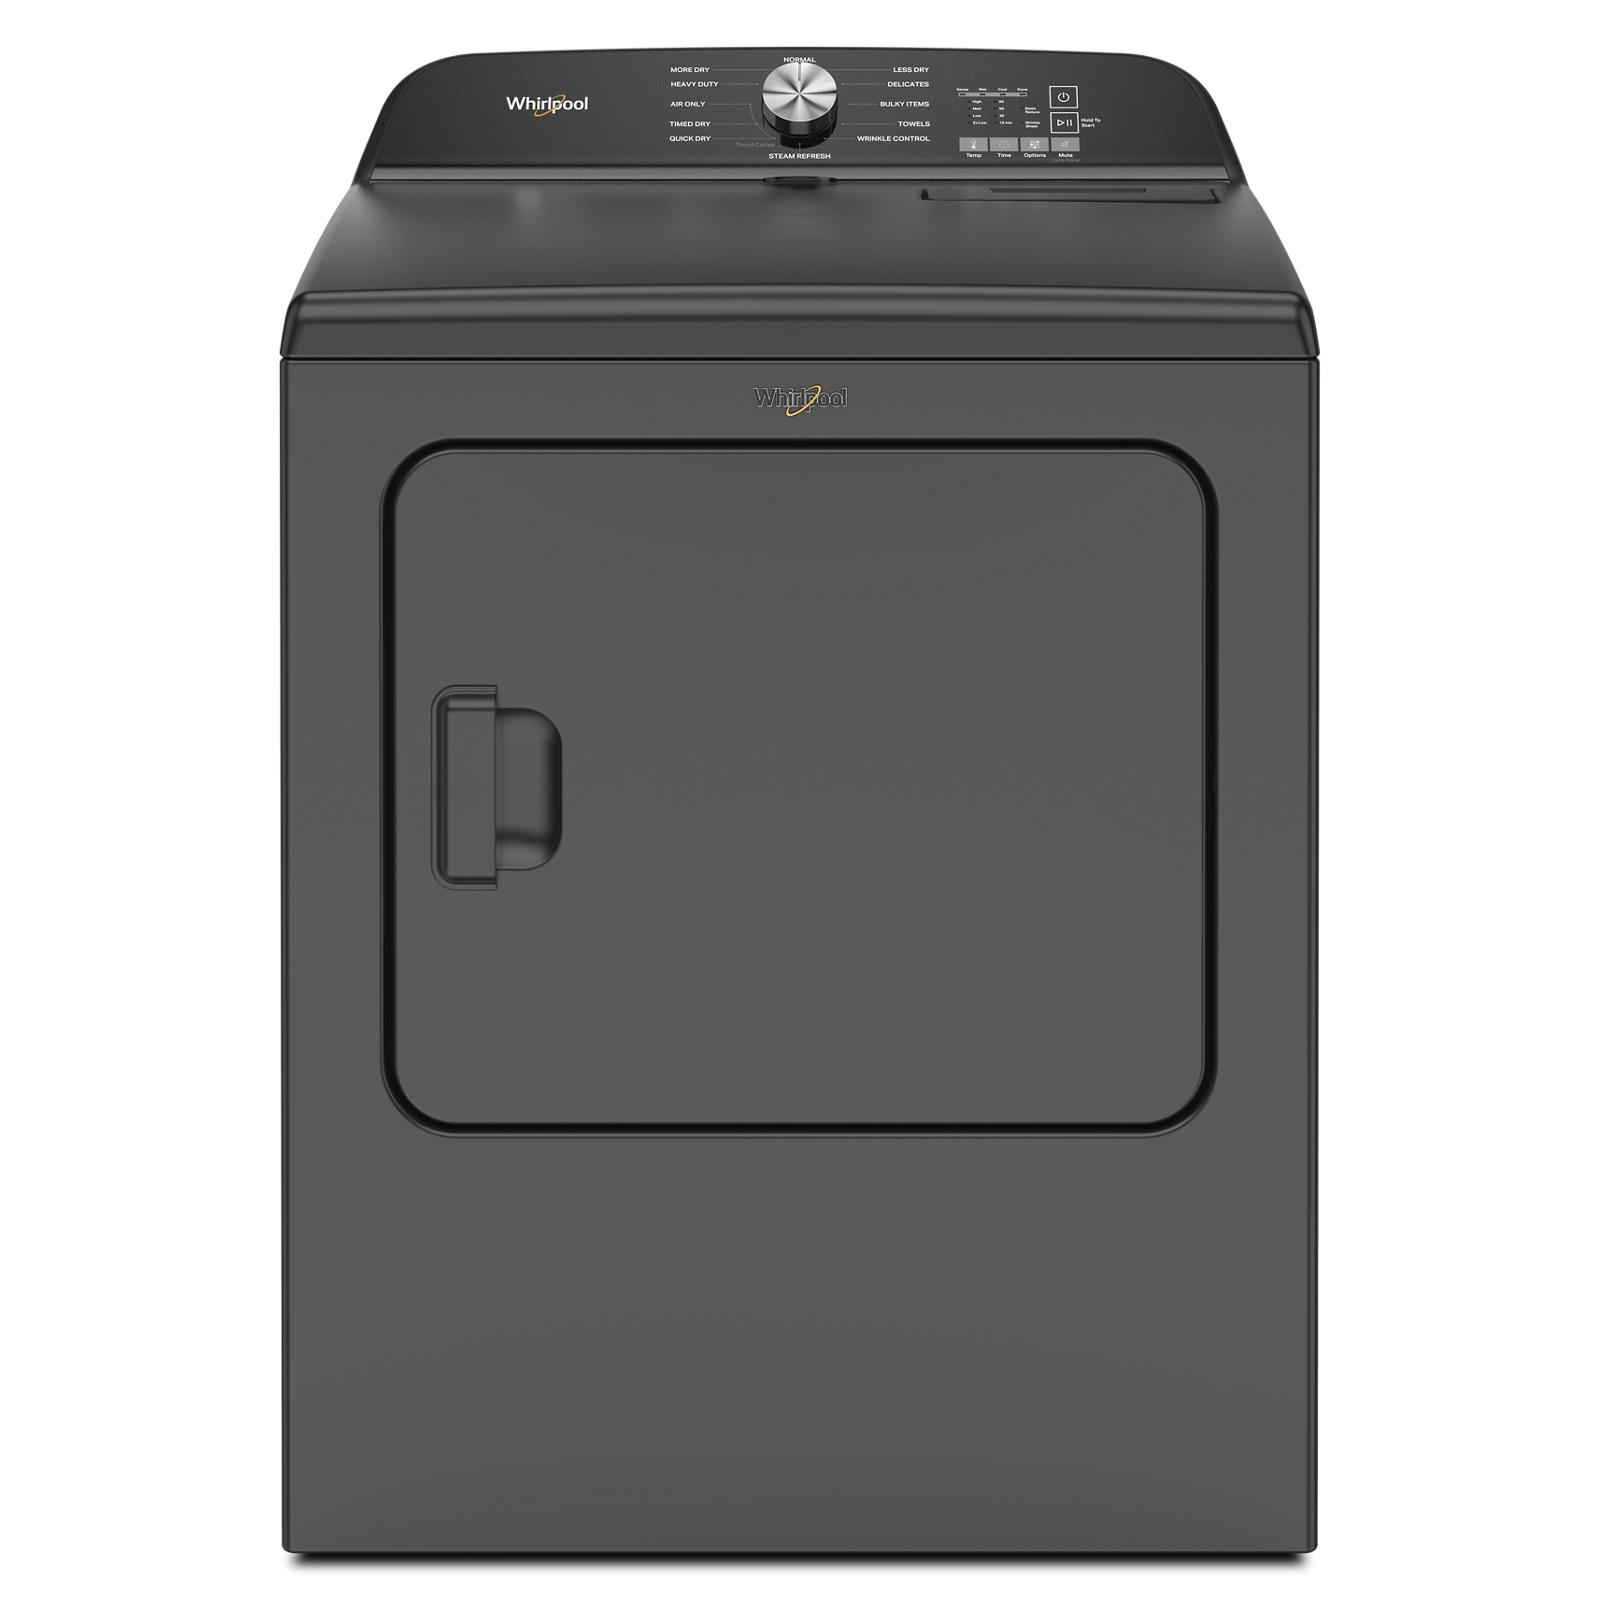 Whirlpool - 7 cu. Ft  Gas Dryer in Black - WGD6150PB